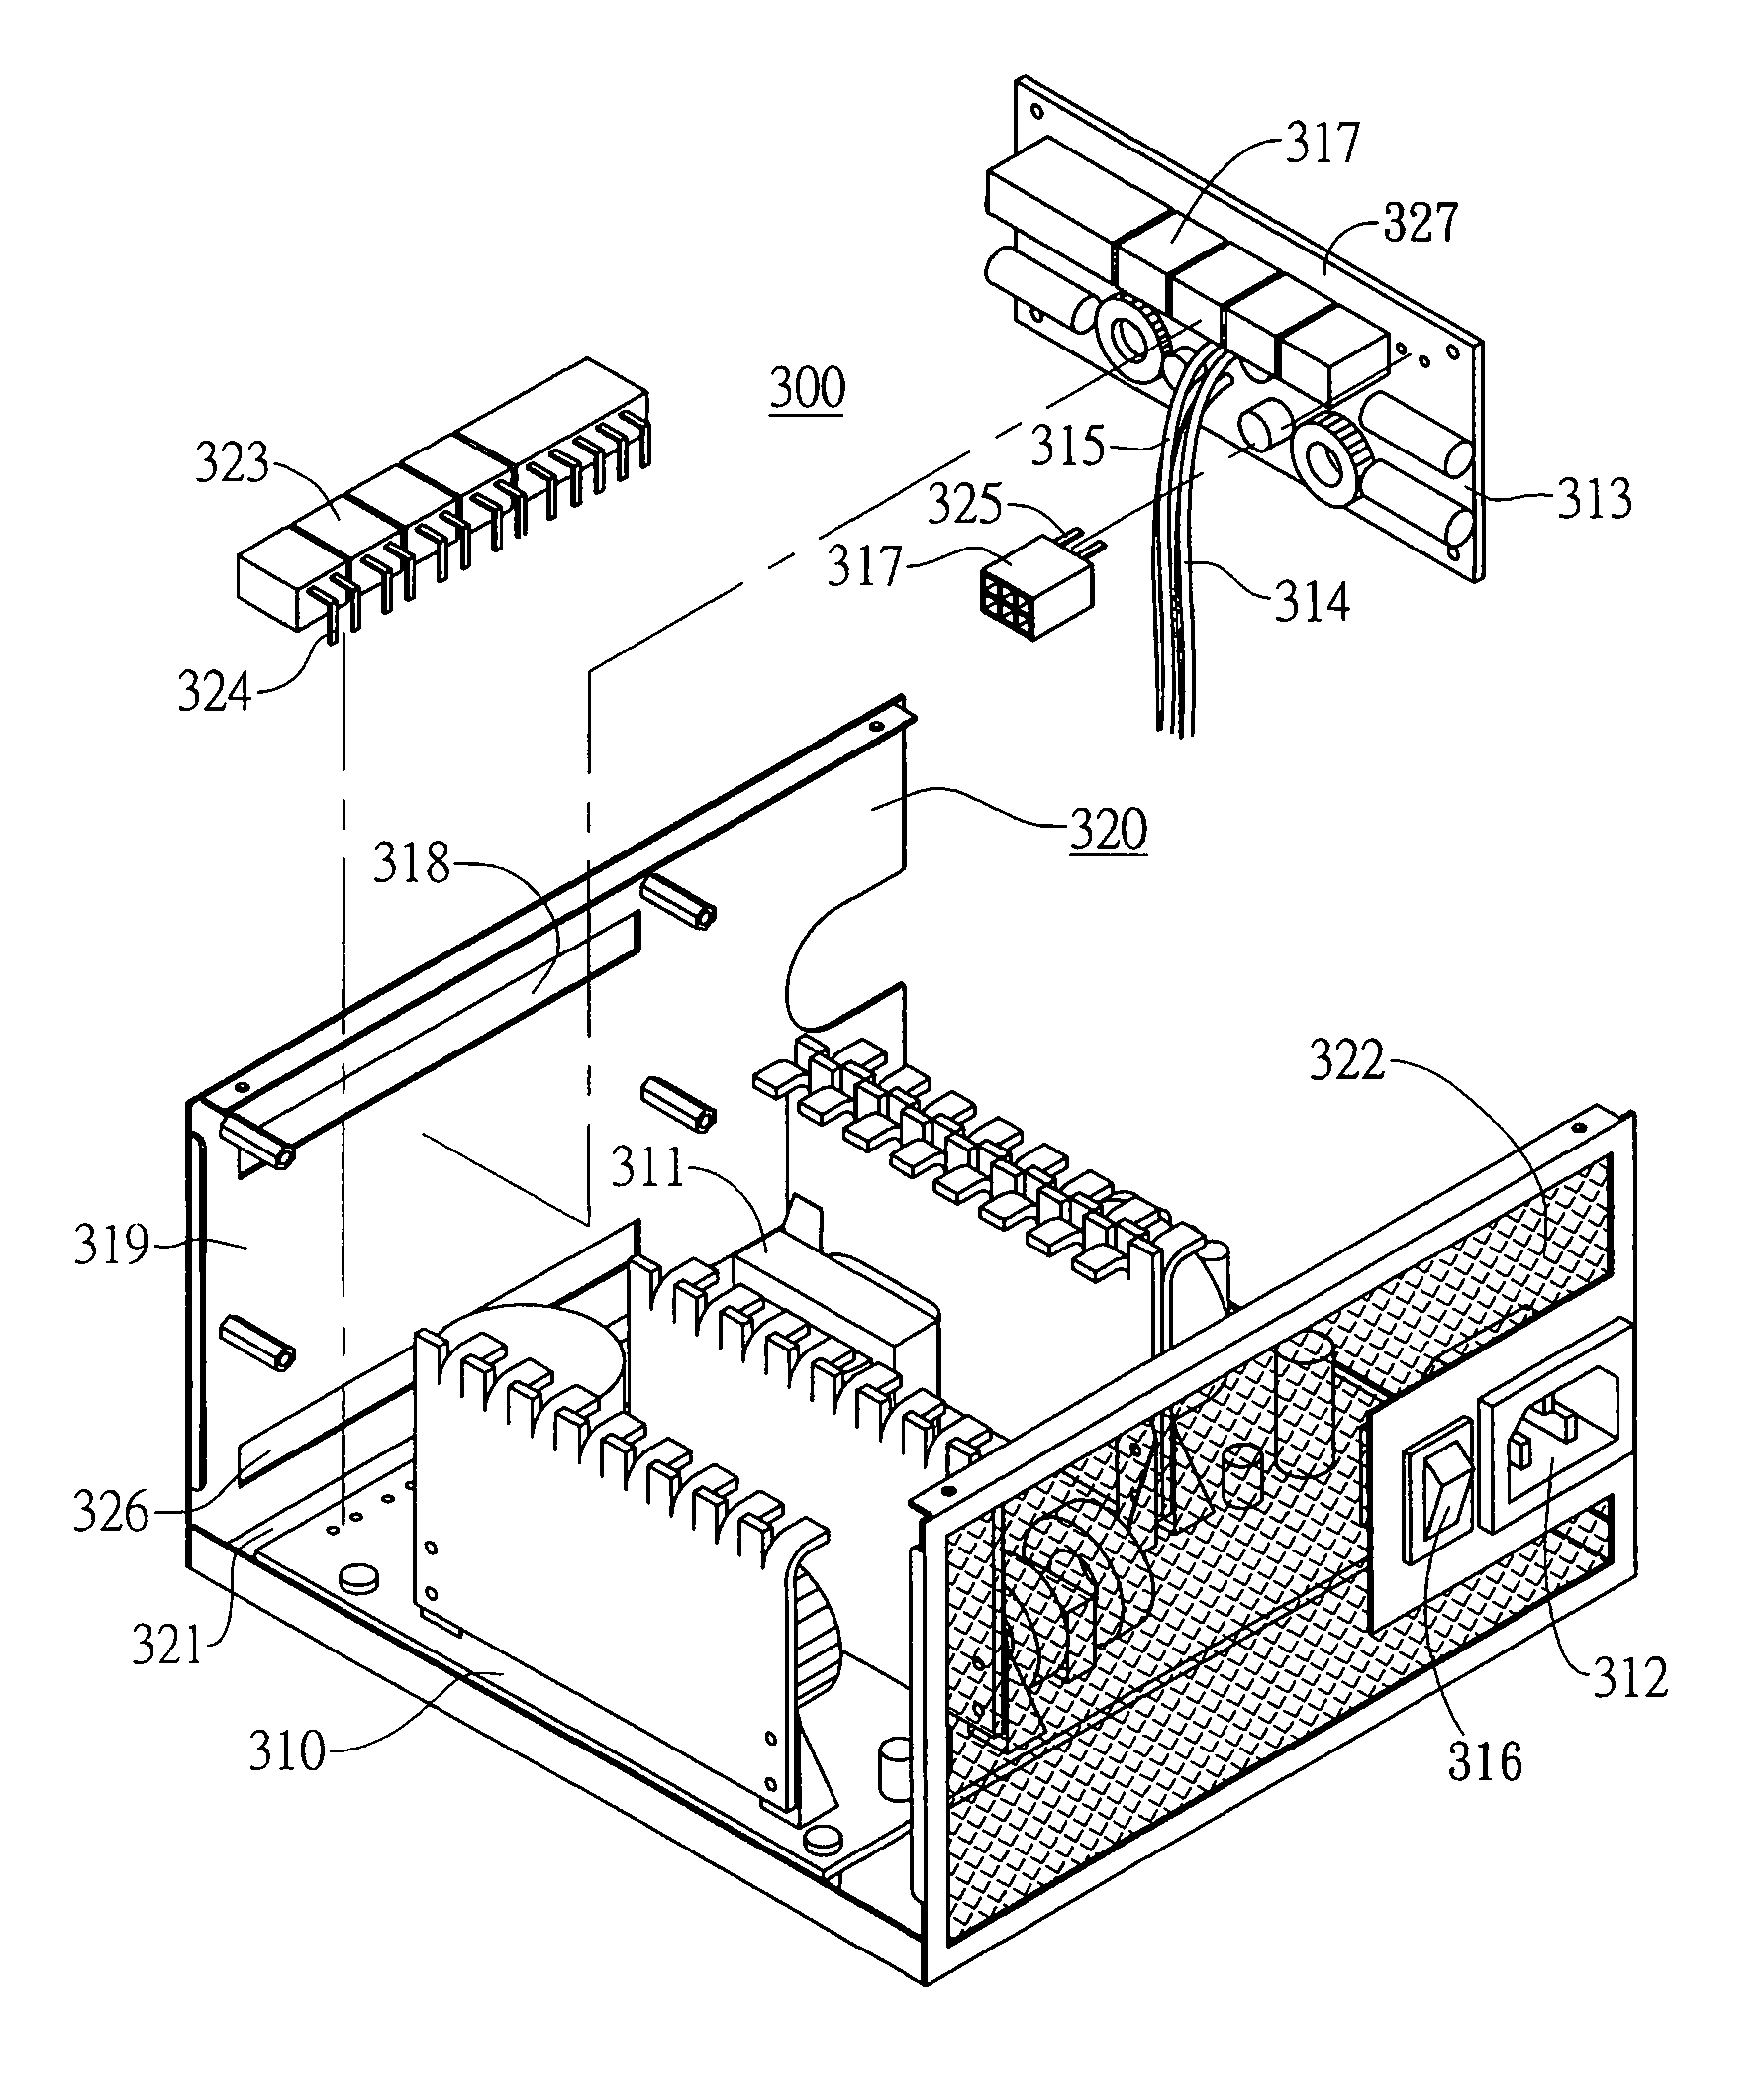 Power supply apparatus having DC-DC converter module mounted on individual printed circuit board